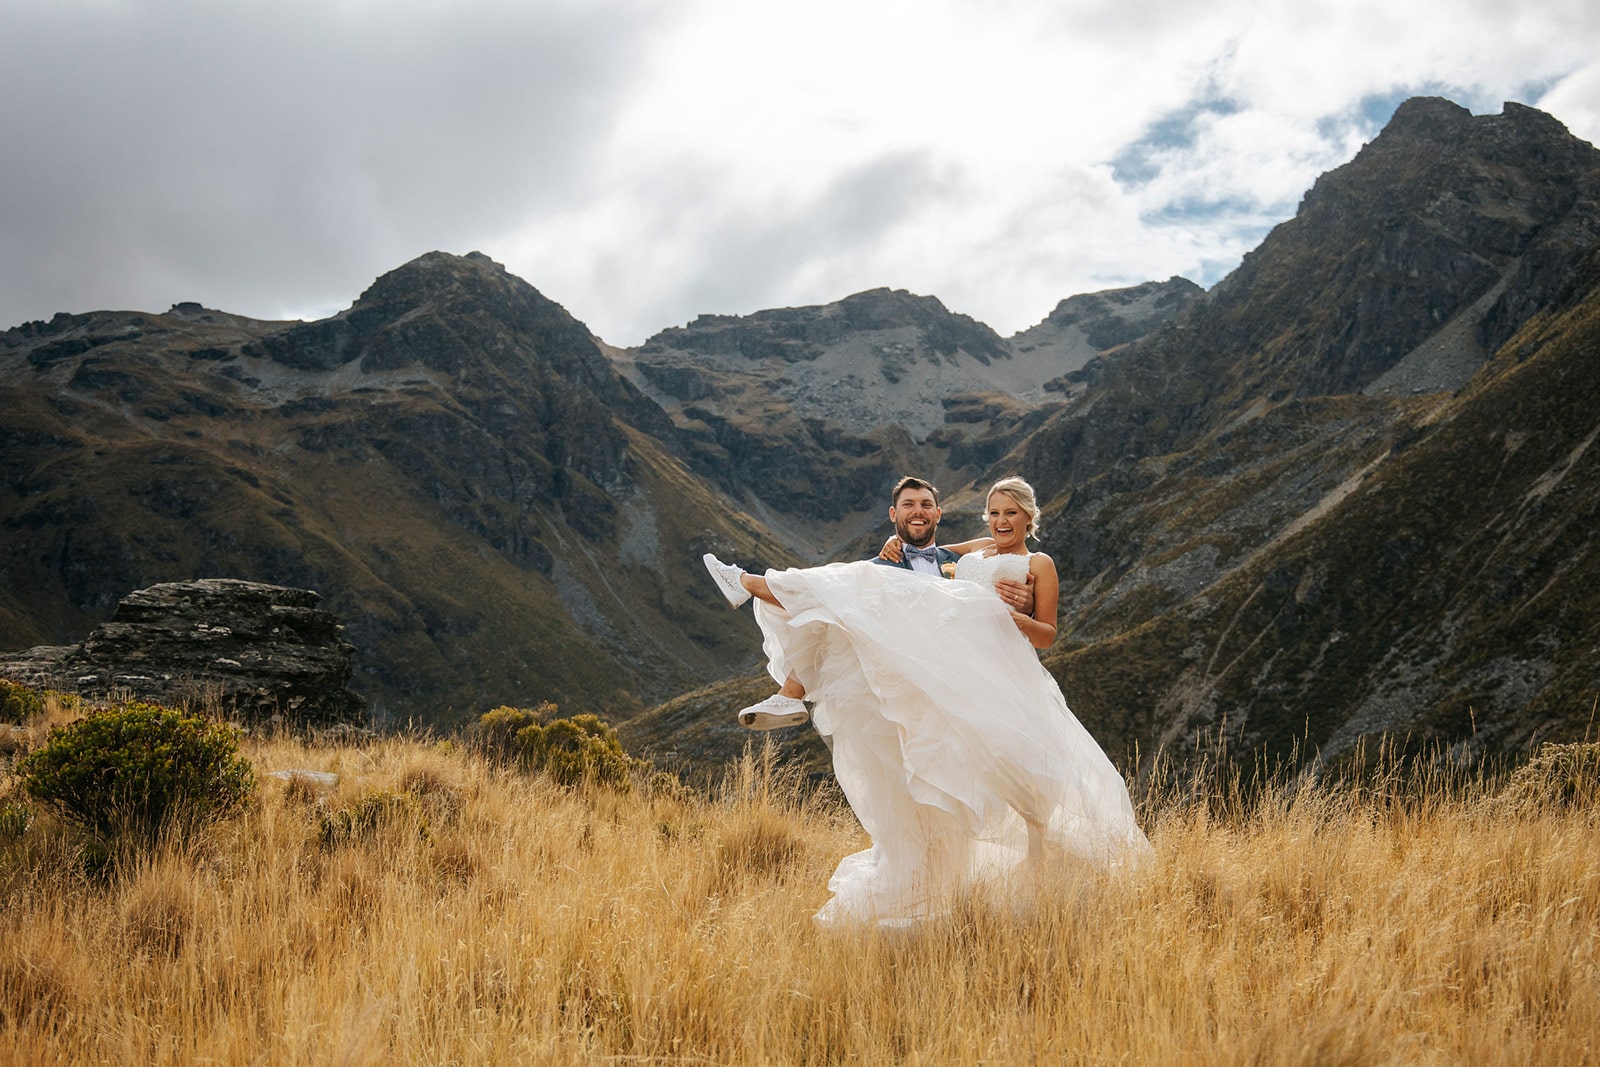 Elopement wedding ideas in New Zealand